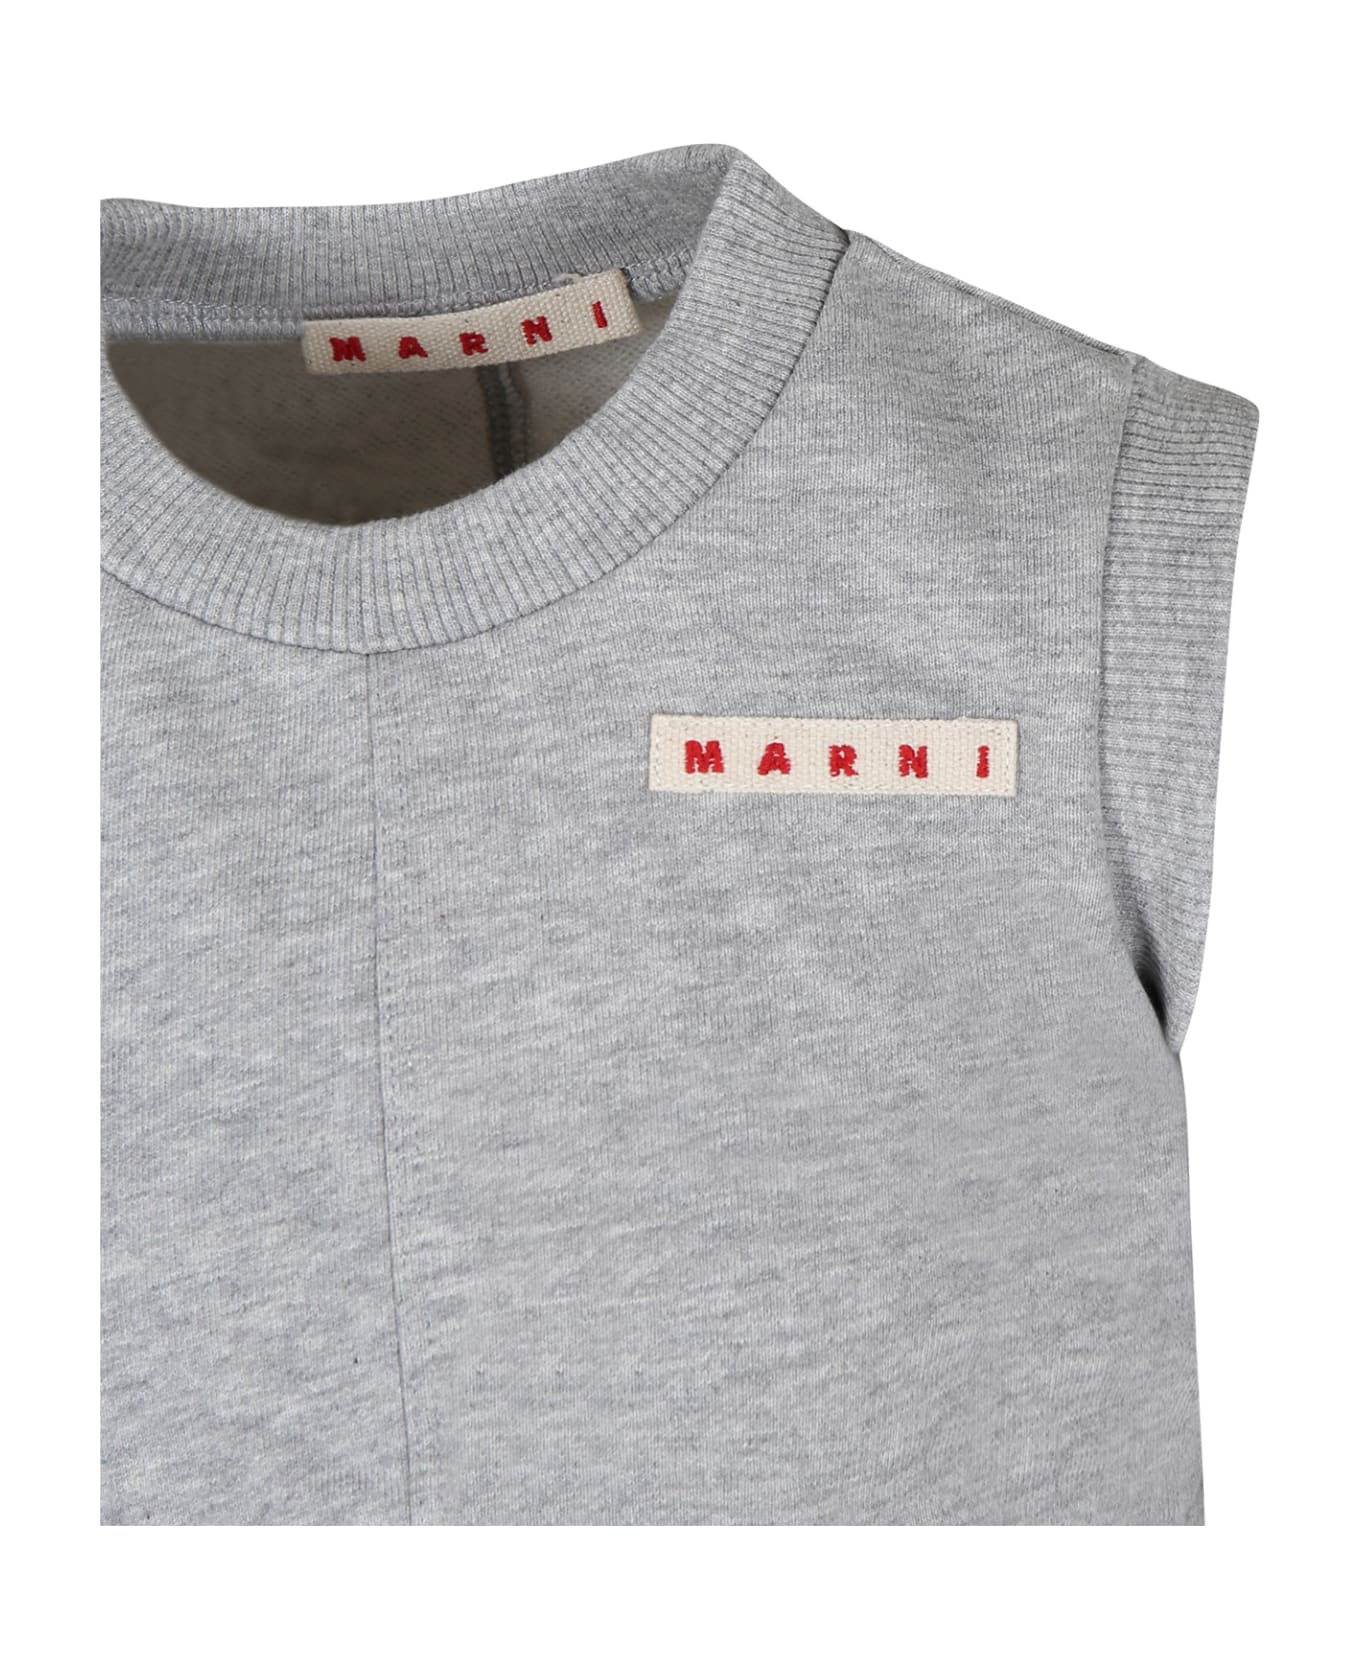 Marni Gray Top Gor Girl With Logo - Grey